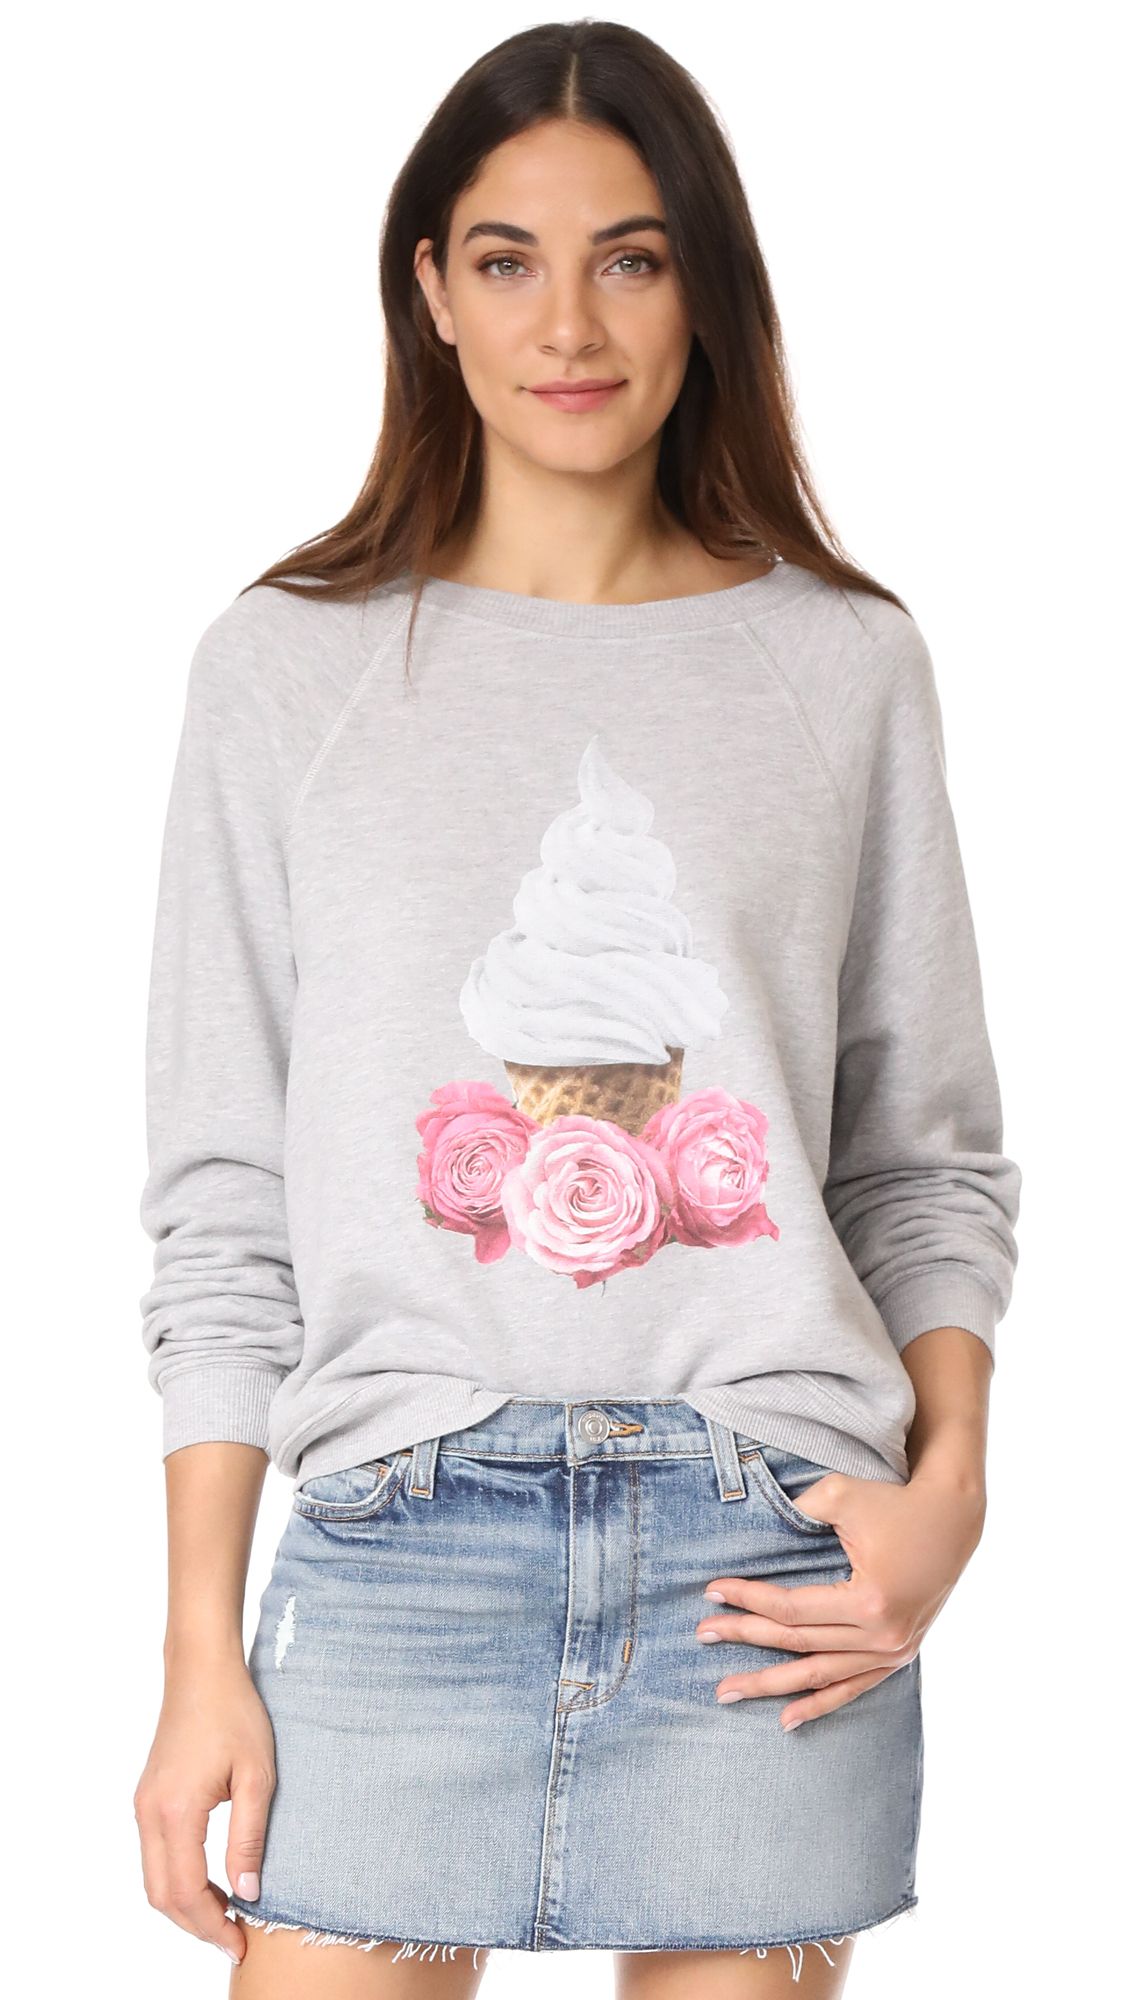 Soft Serve Shrine Sweatshirt | Shopbop